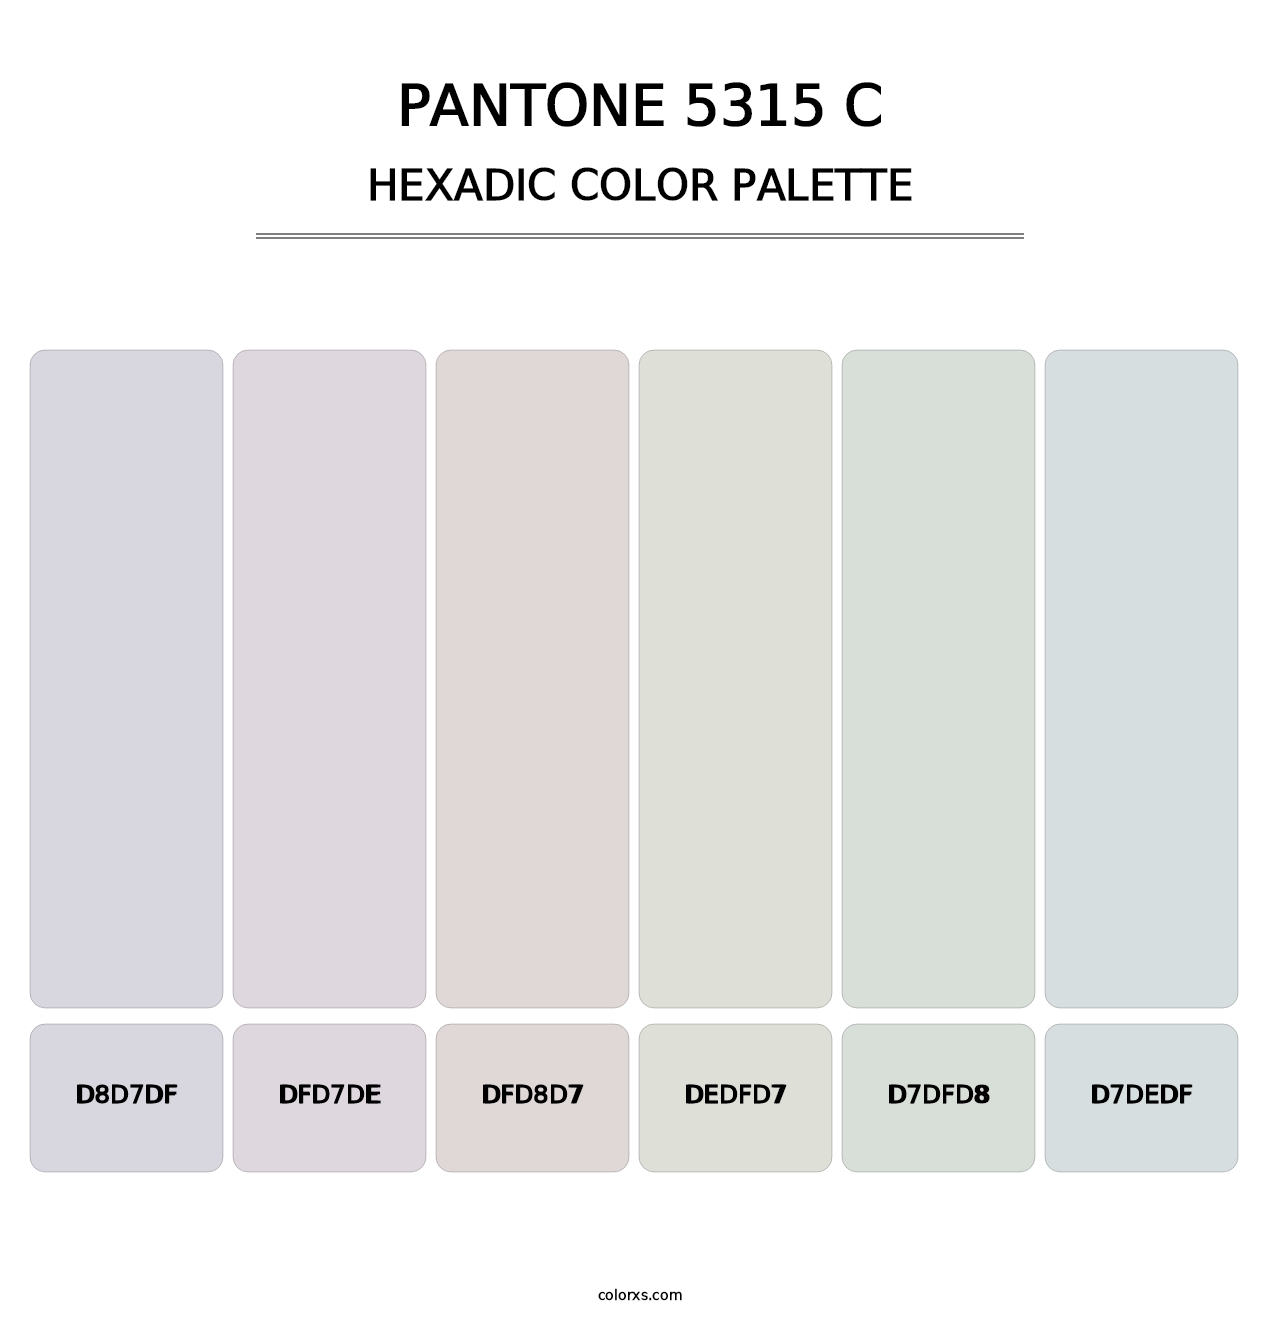 PANTONE 5315 C - Hexadic Color Palette